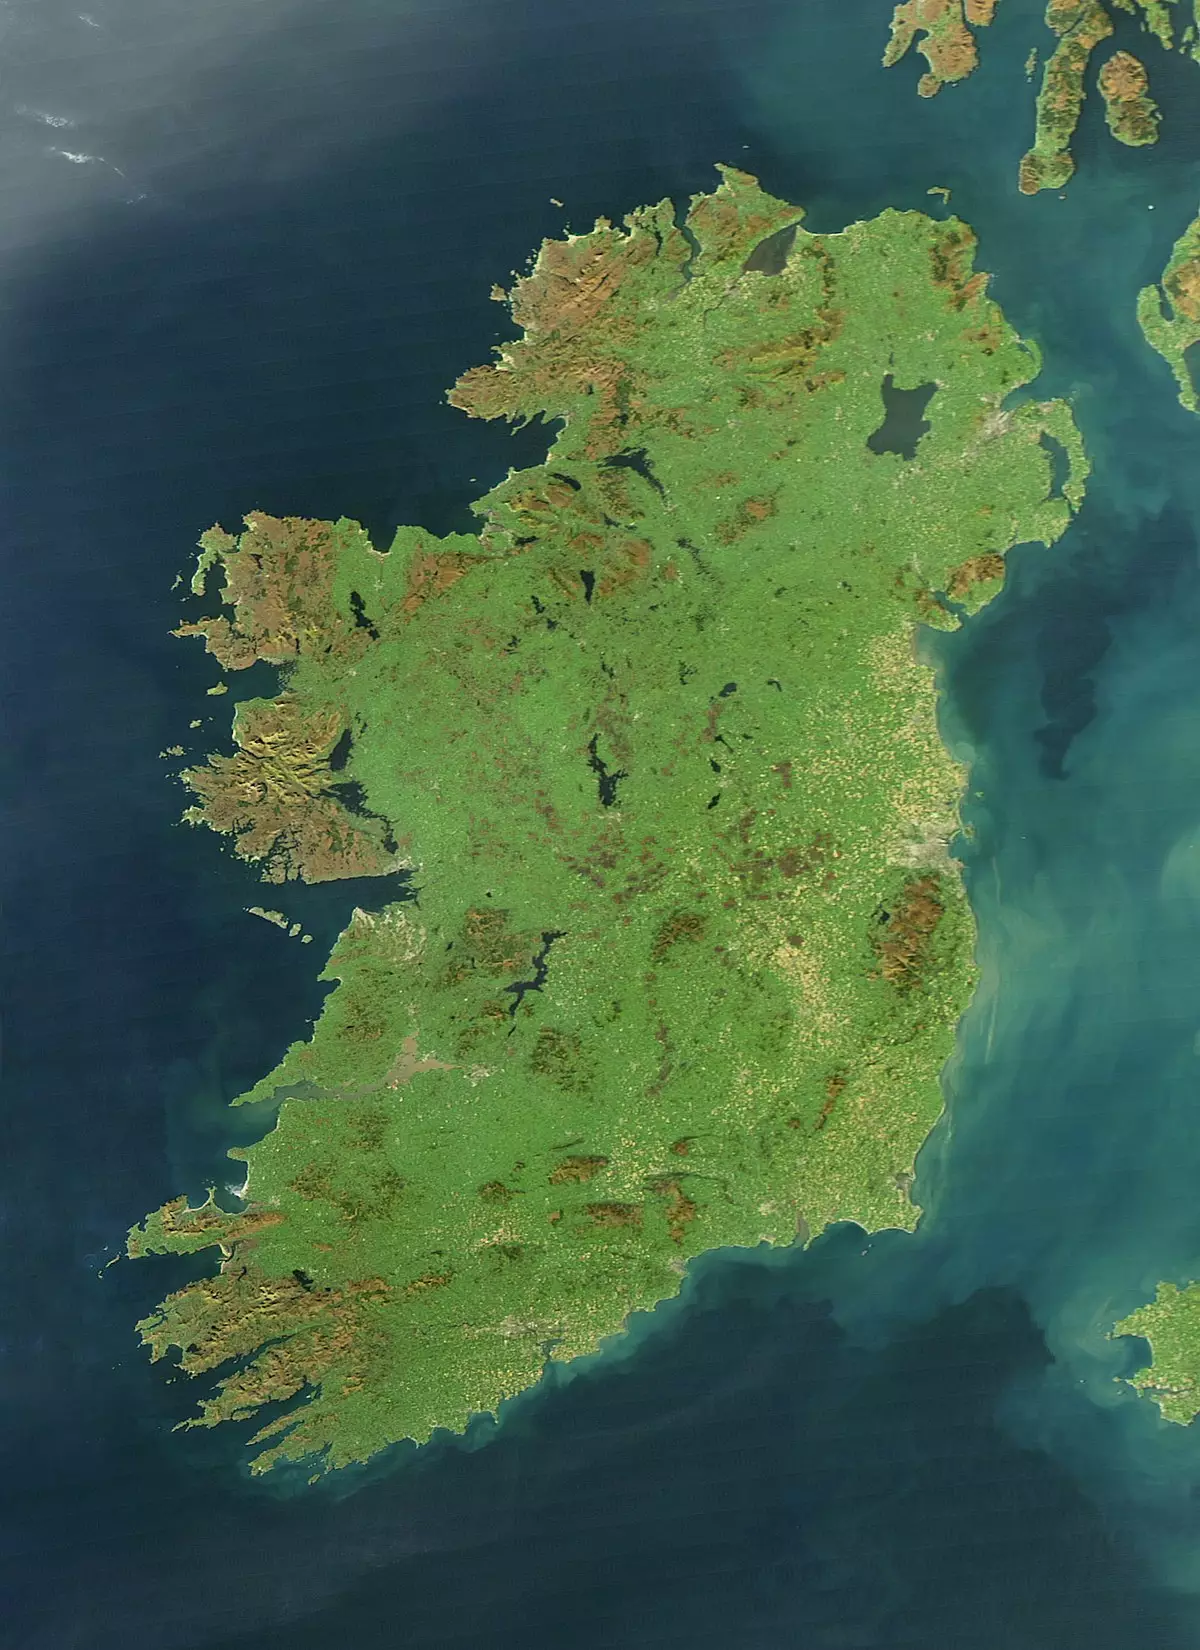 3% of English people haven’t heard of Ireland